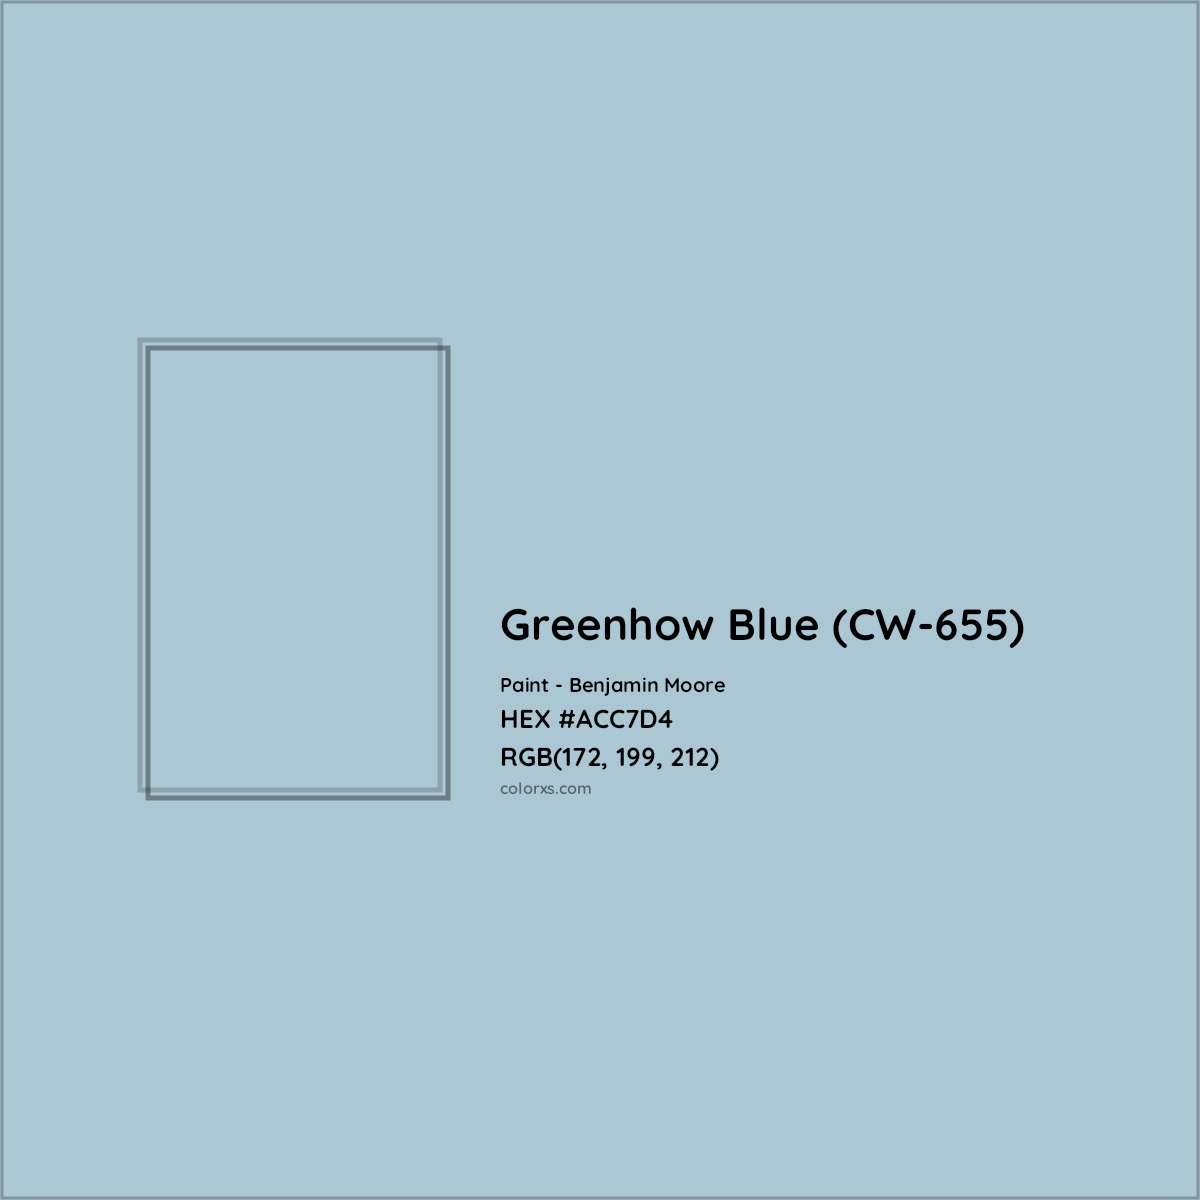 HEX #ACC7D4 Greenhow Blue (CW-655) Paint Benjamin Moore - Color Code